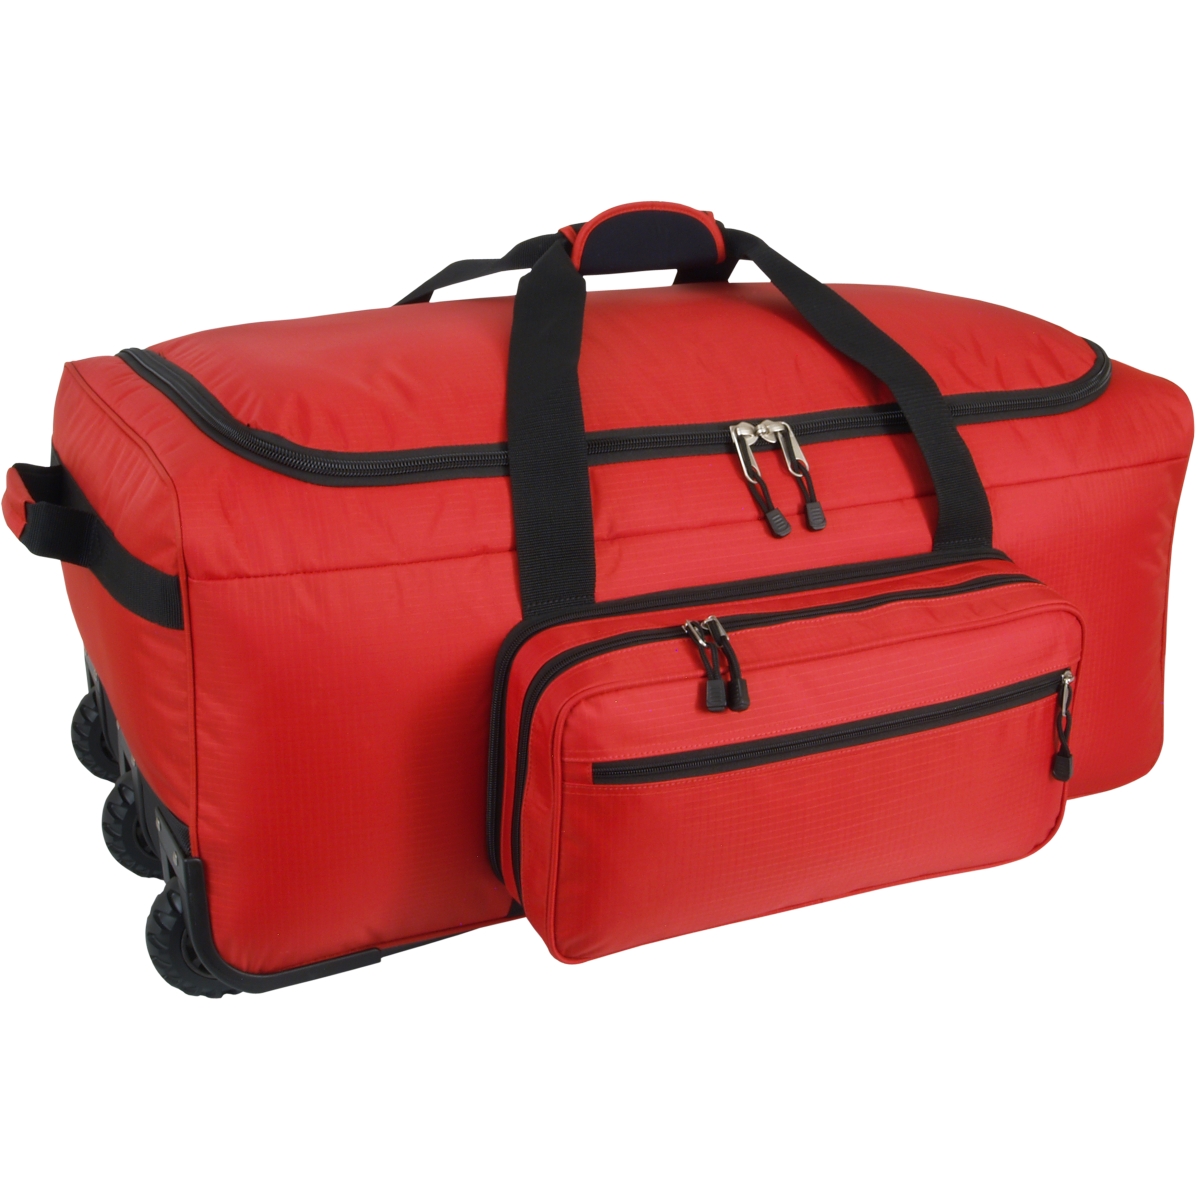 Advantus Mrc9133-rdrsn Mercury Luggage Mini Monster Bag, Red